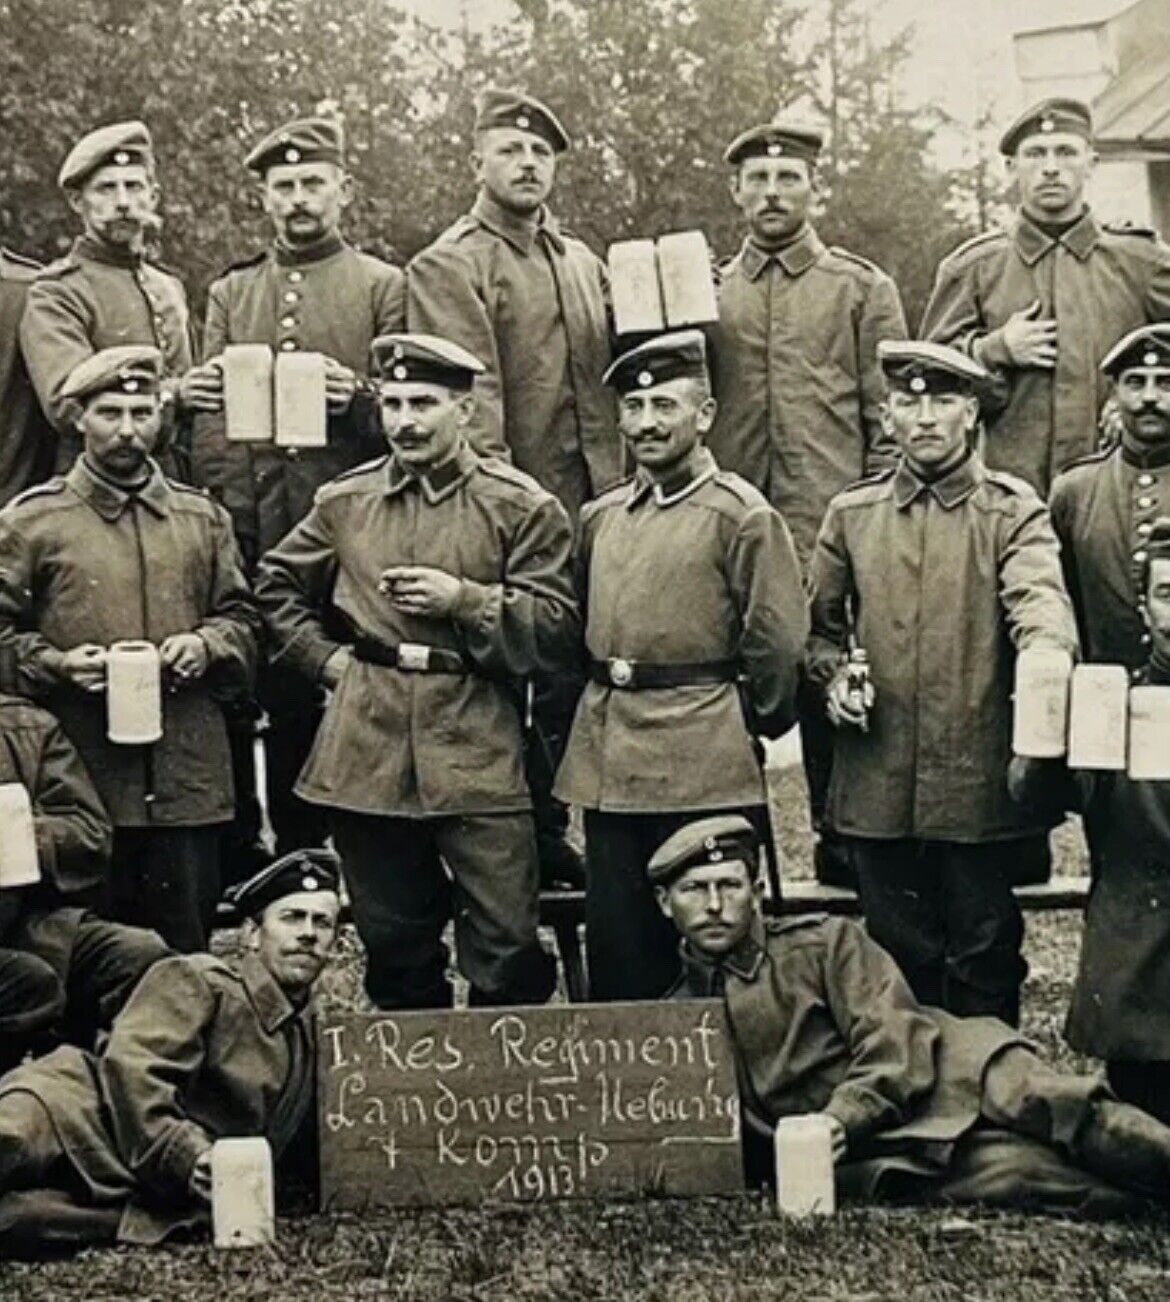 WW1 Era German Unit Uniformed Soldiers w/ Steins - Unused Original Postcard